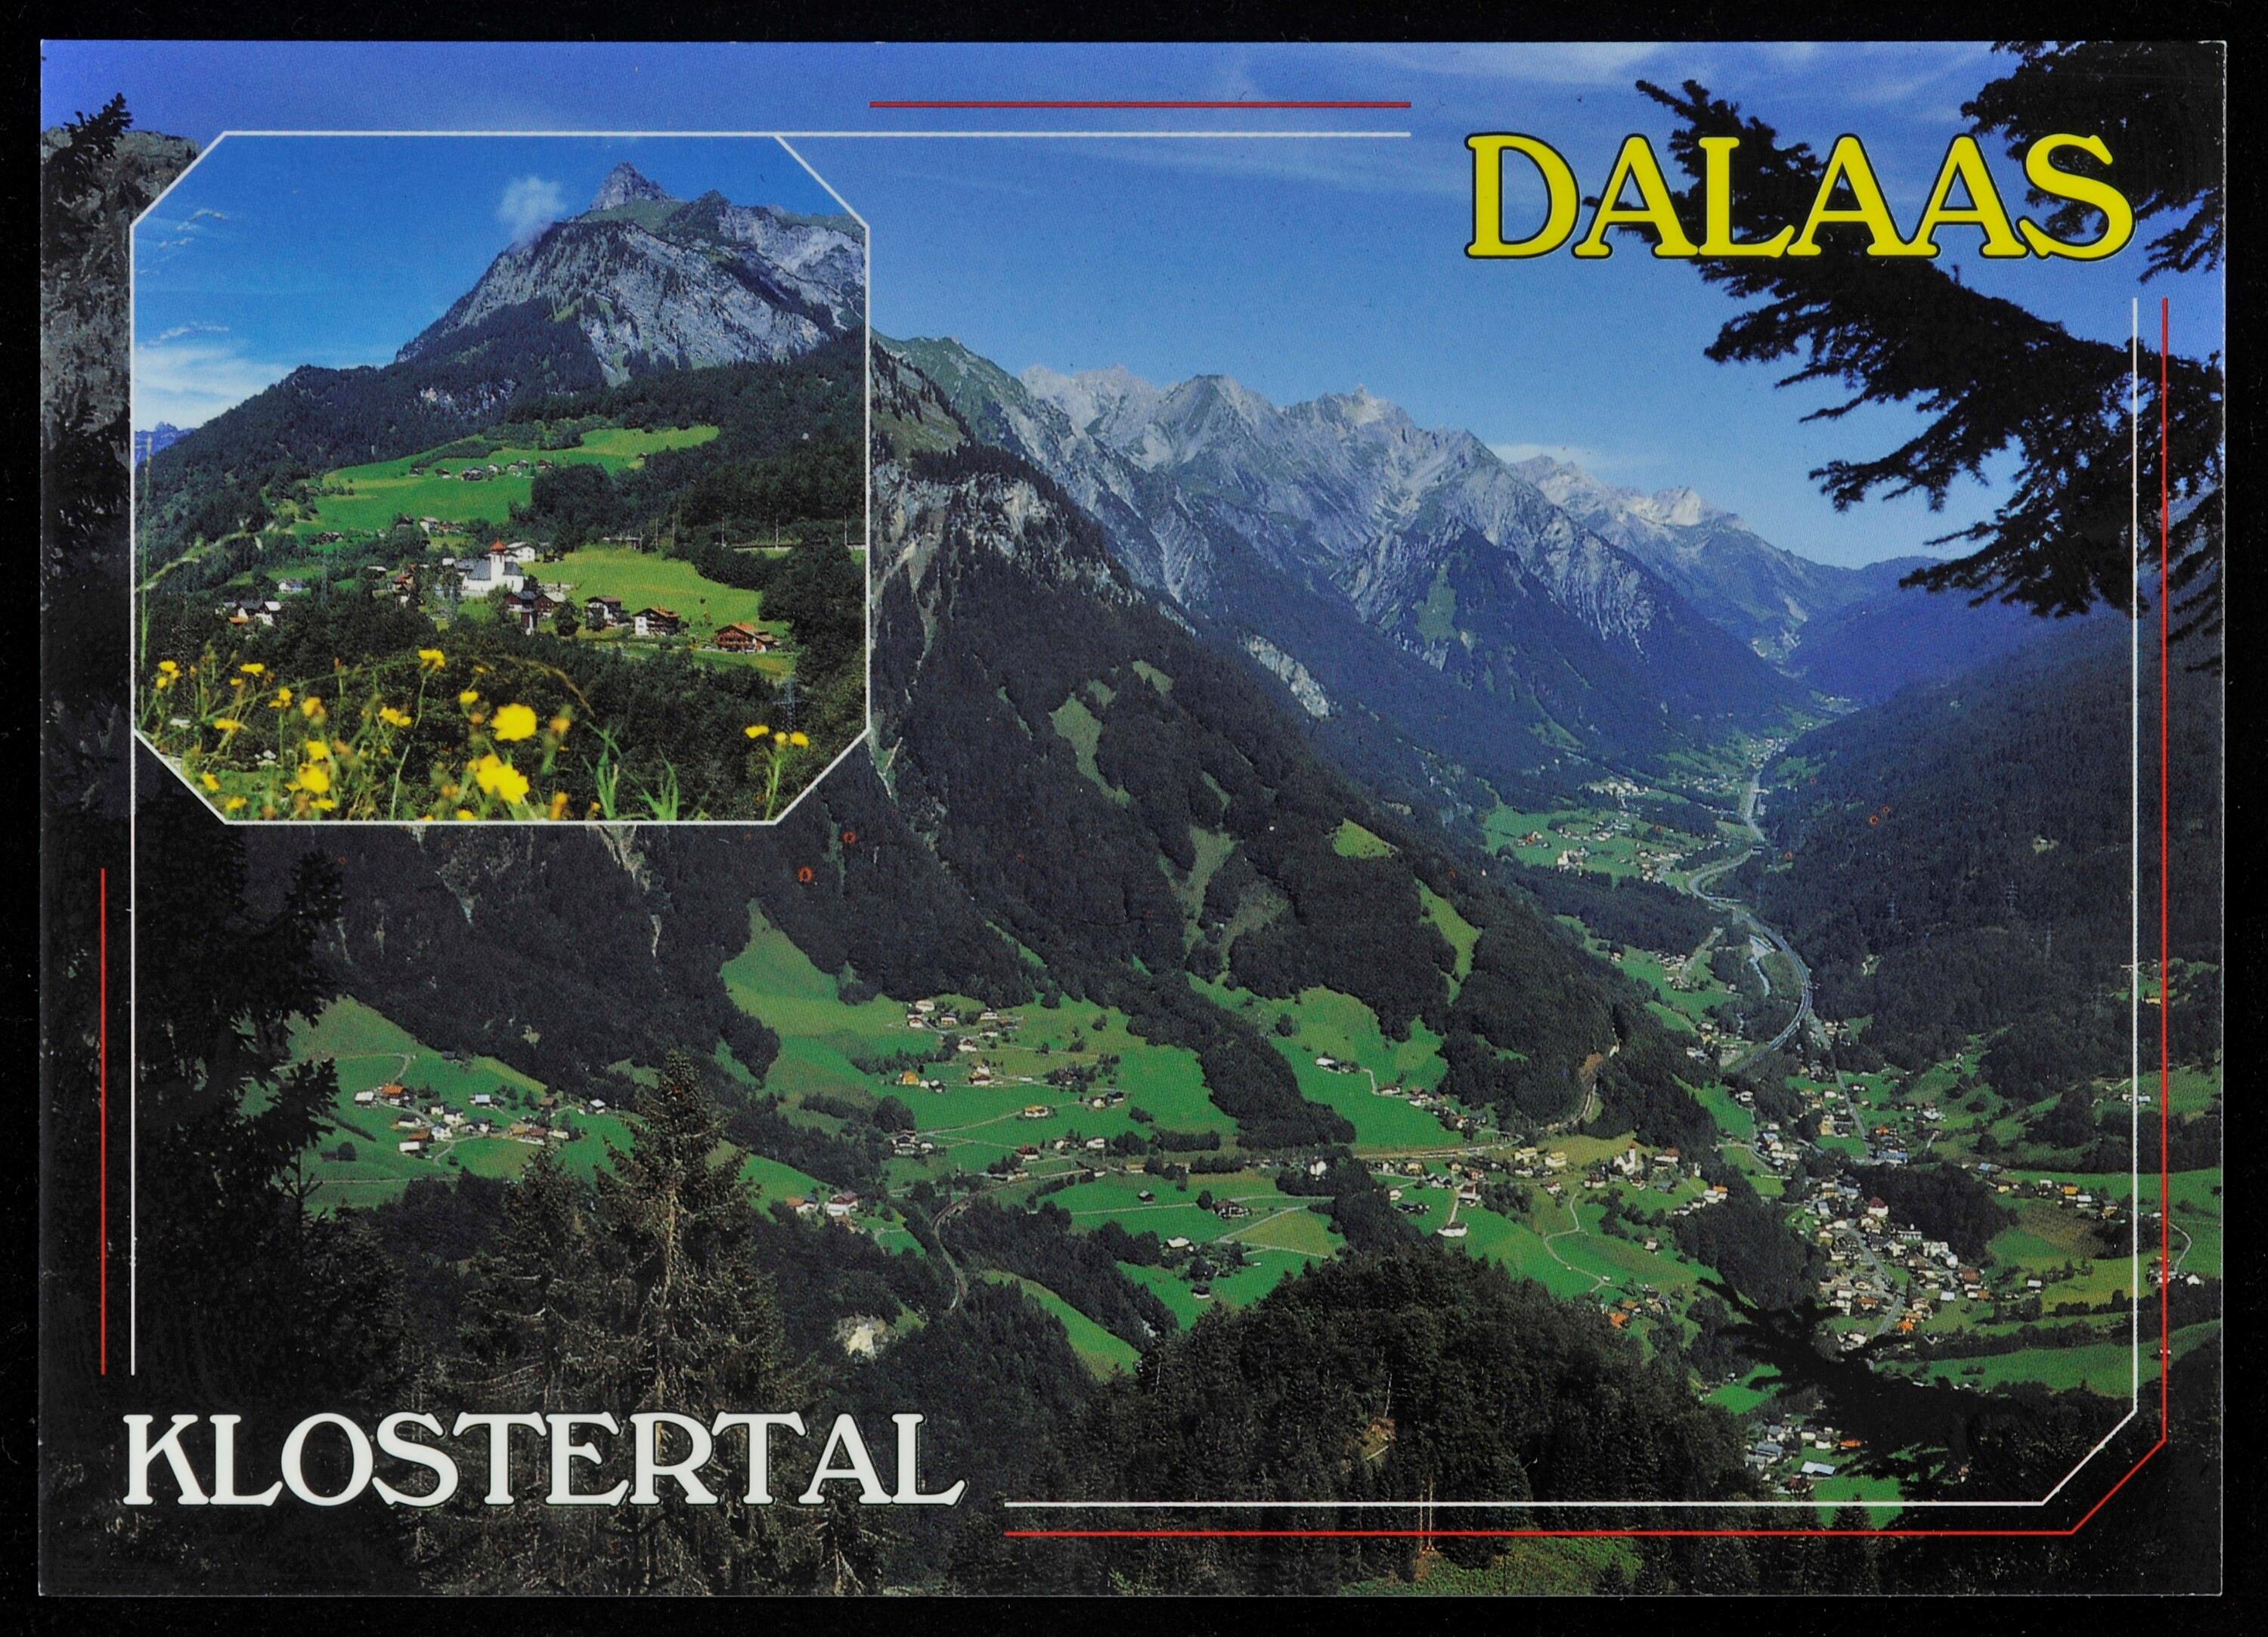 Dalaas Klostertal></div>


    <hr>
    <div class=